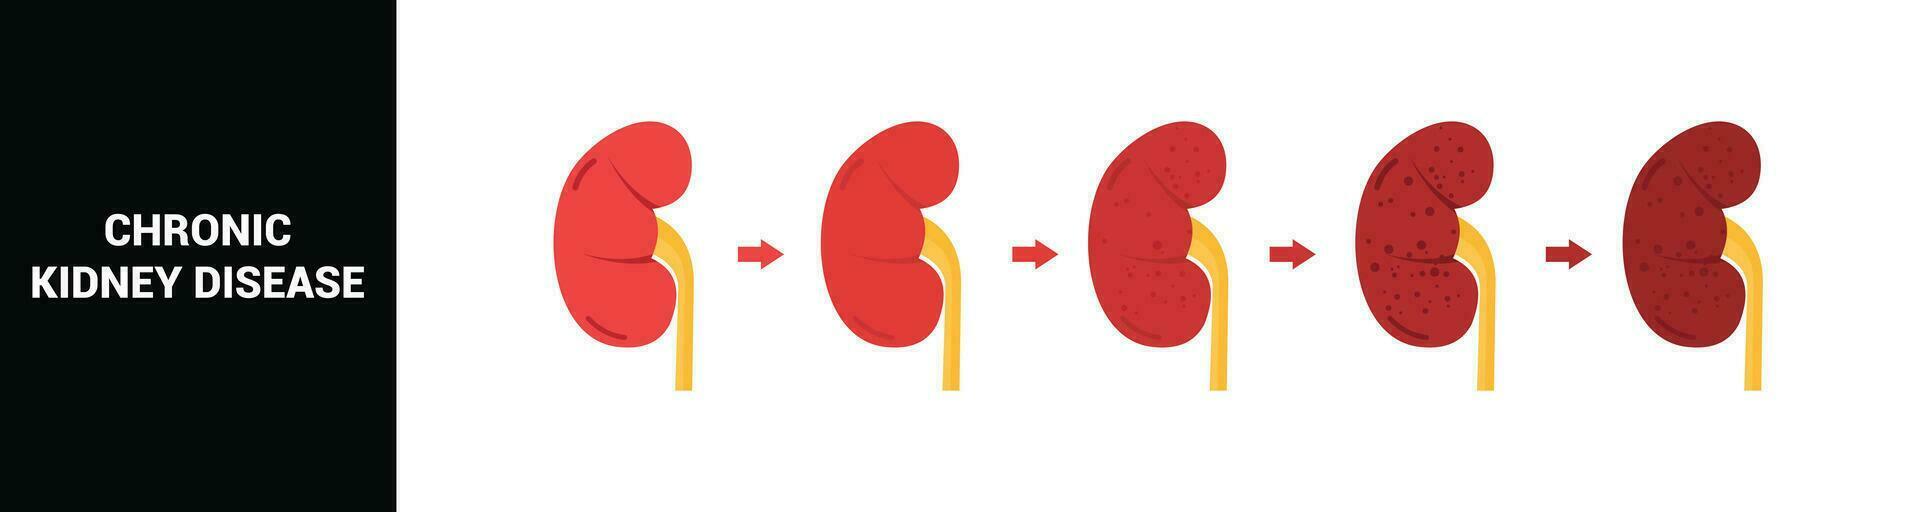 Chronic kidney disease vector illustration